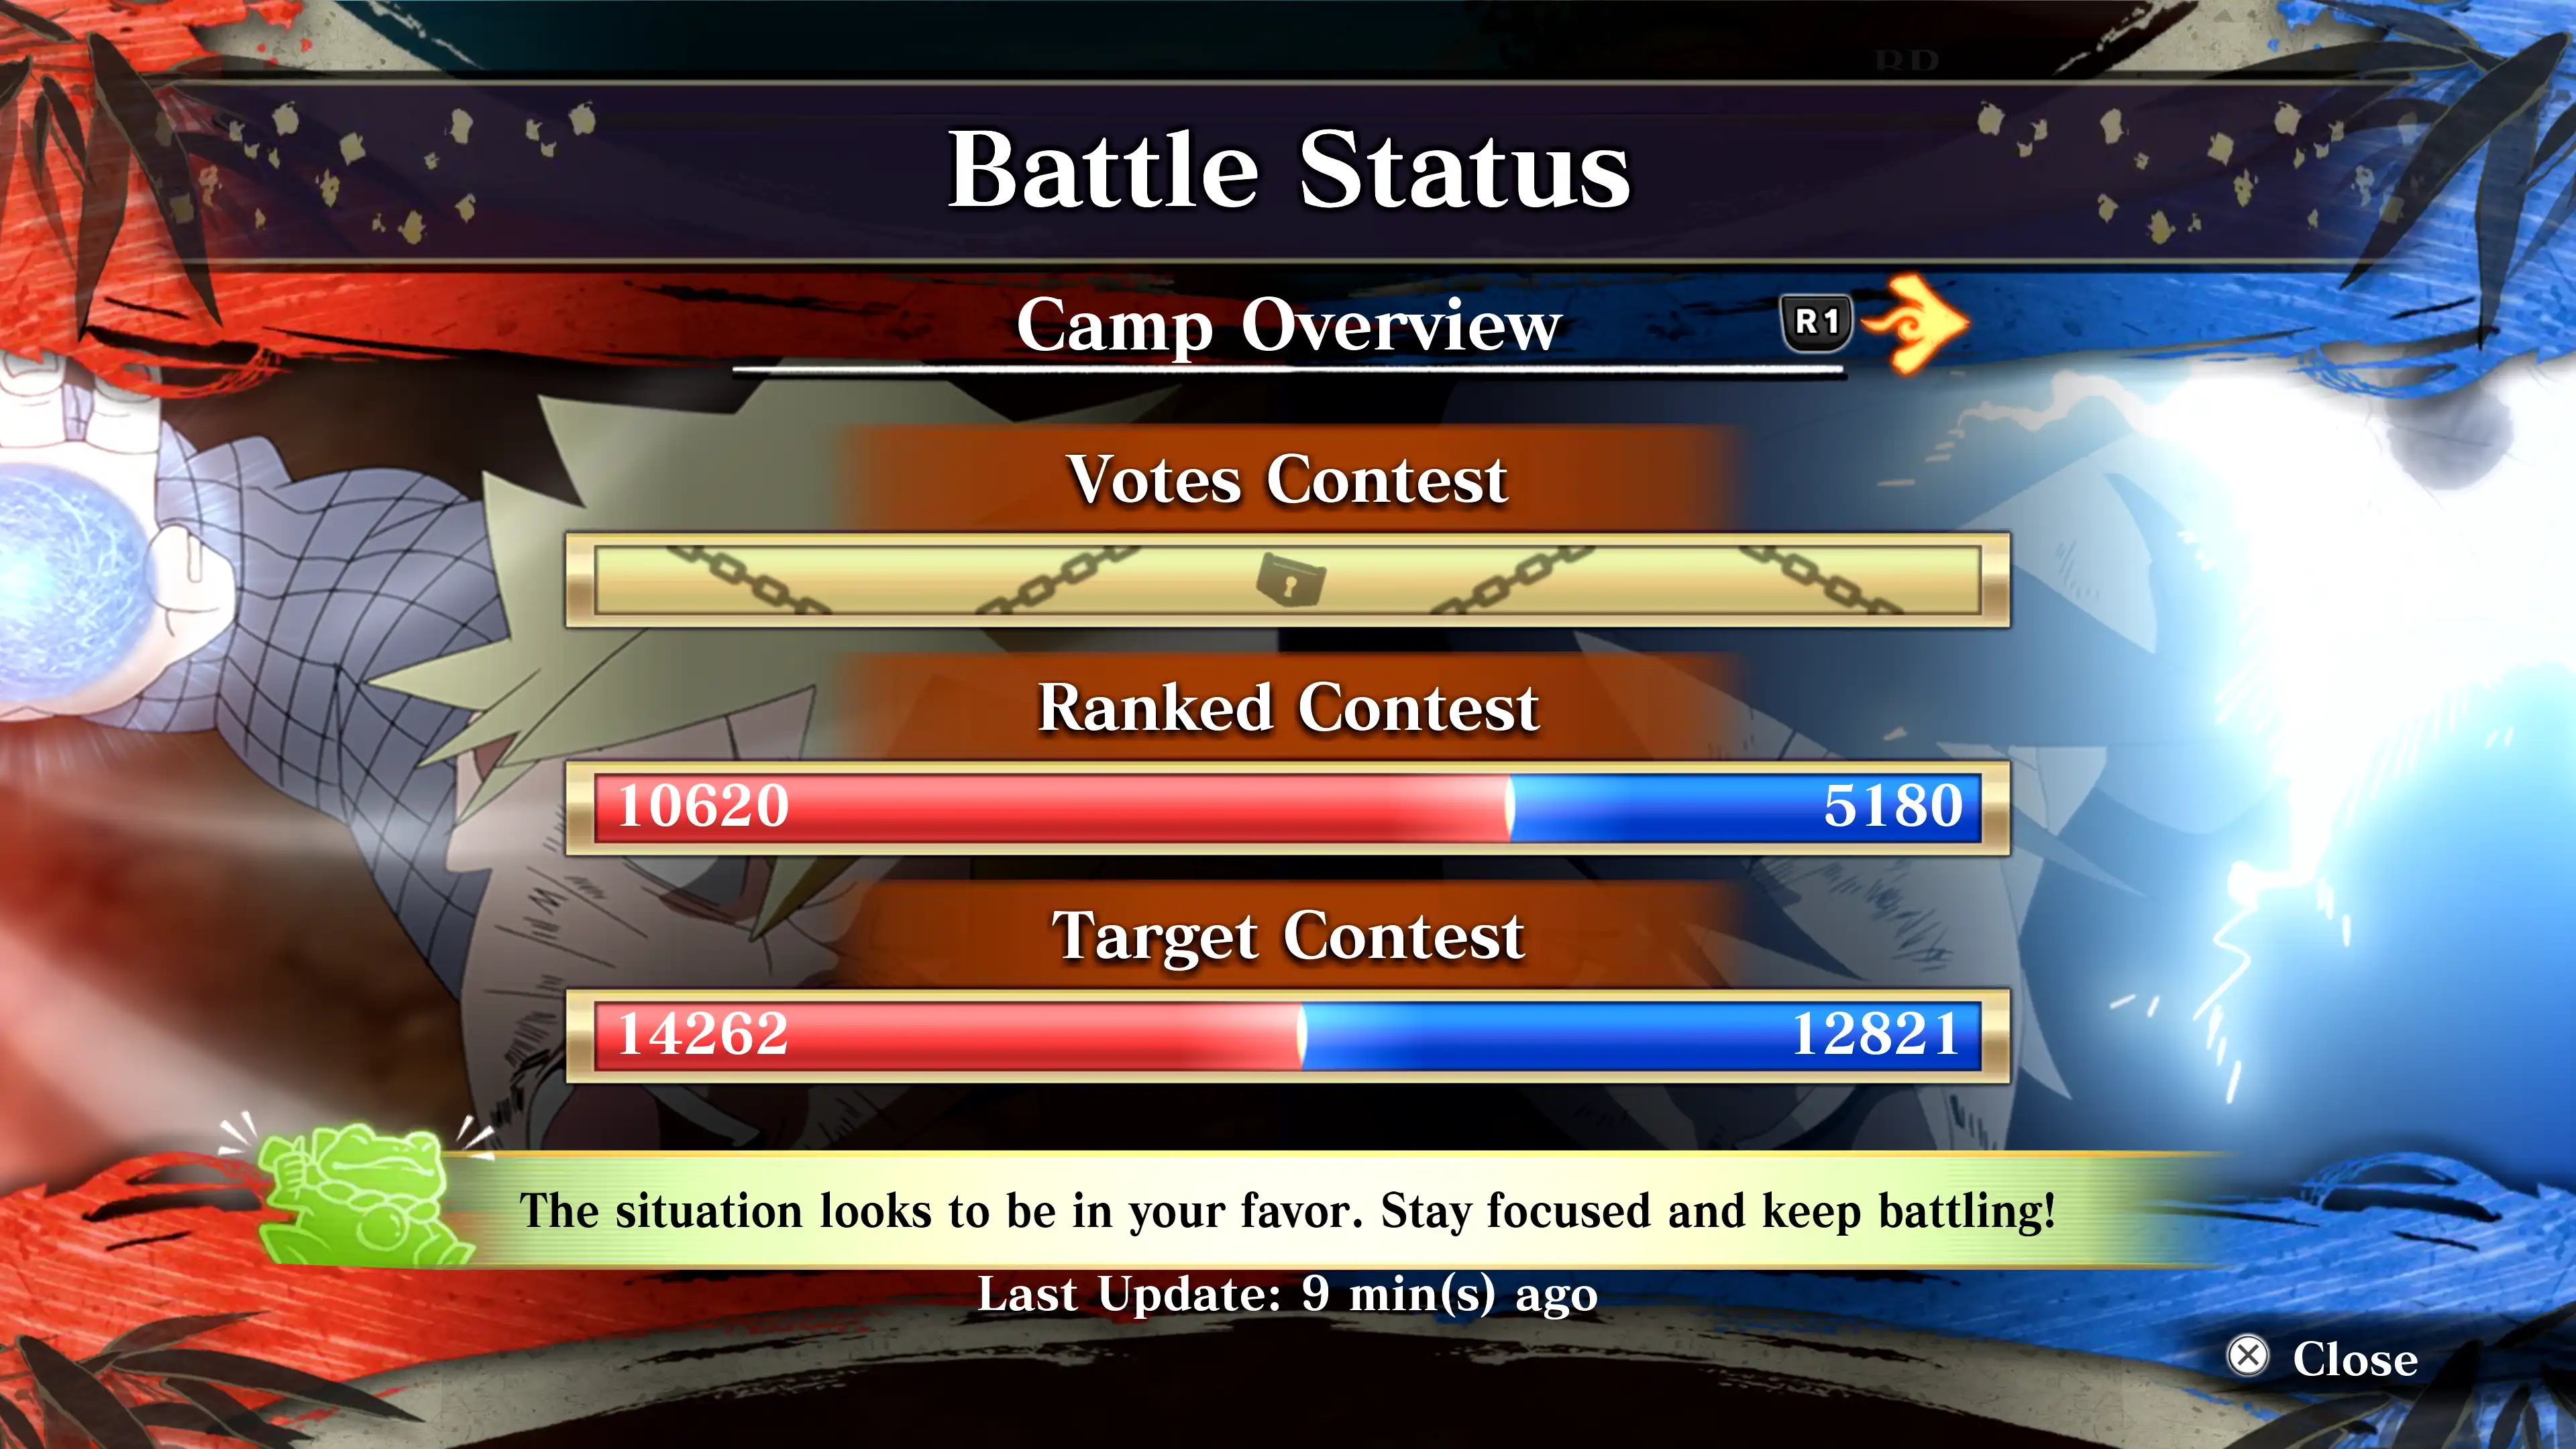 Battle Status Menu for Ninja Battle event